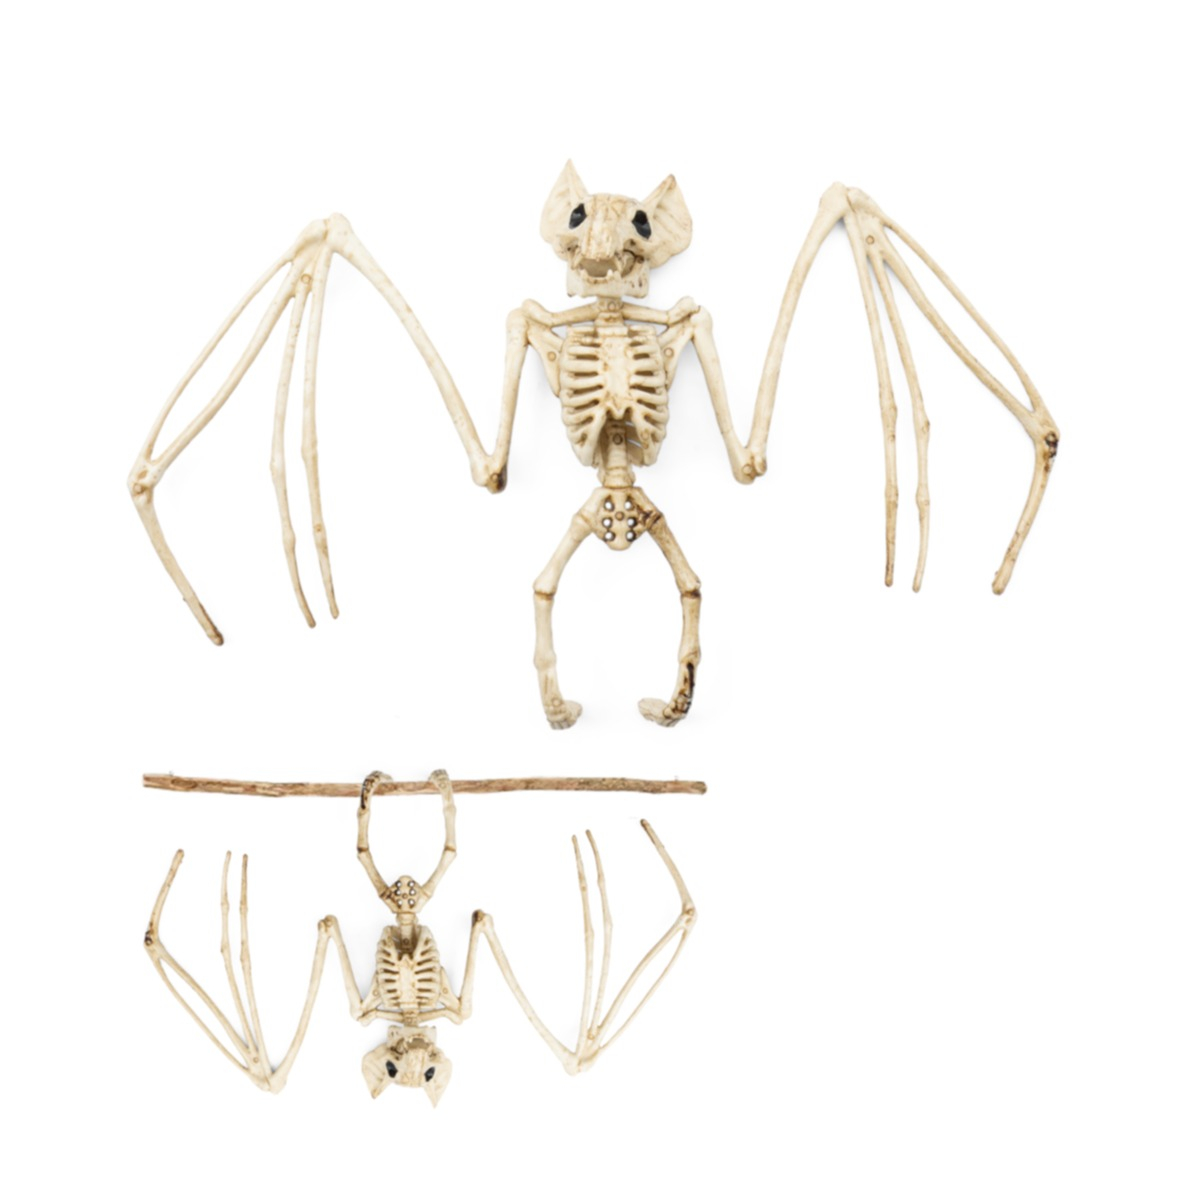 16cm) Halloween Deko Fledermaus Skelett Accessoire